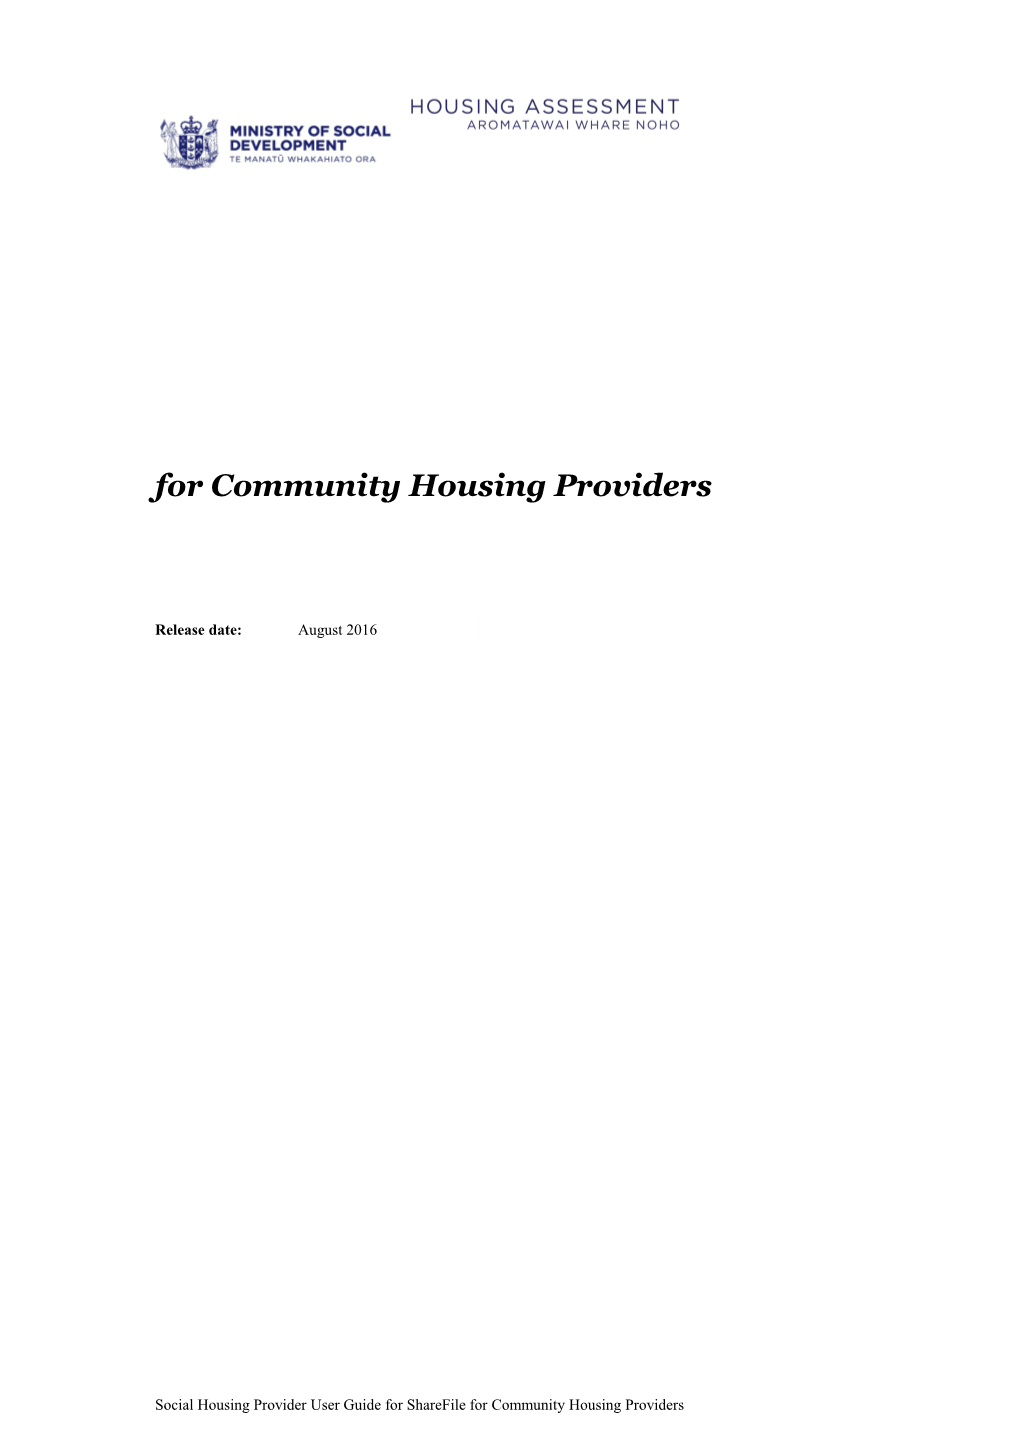 Social Housing Provider